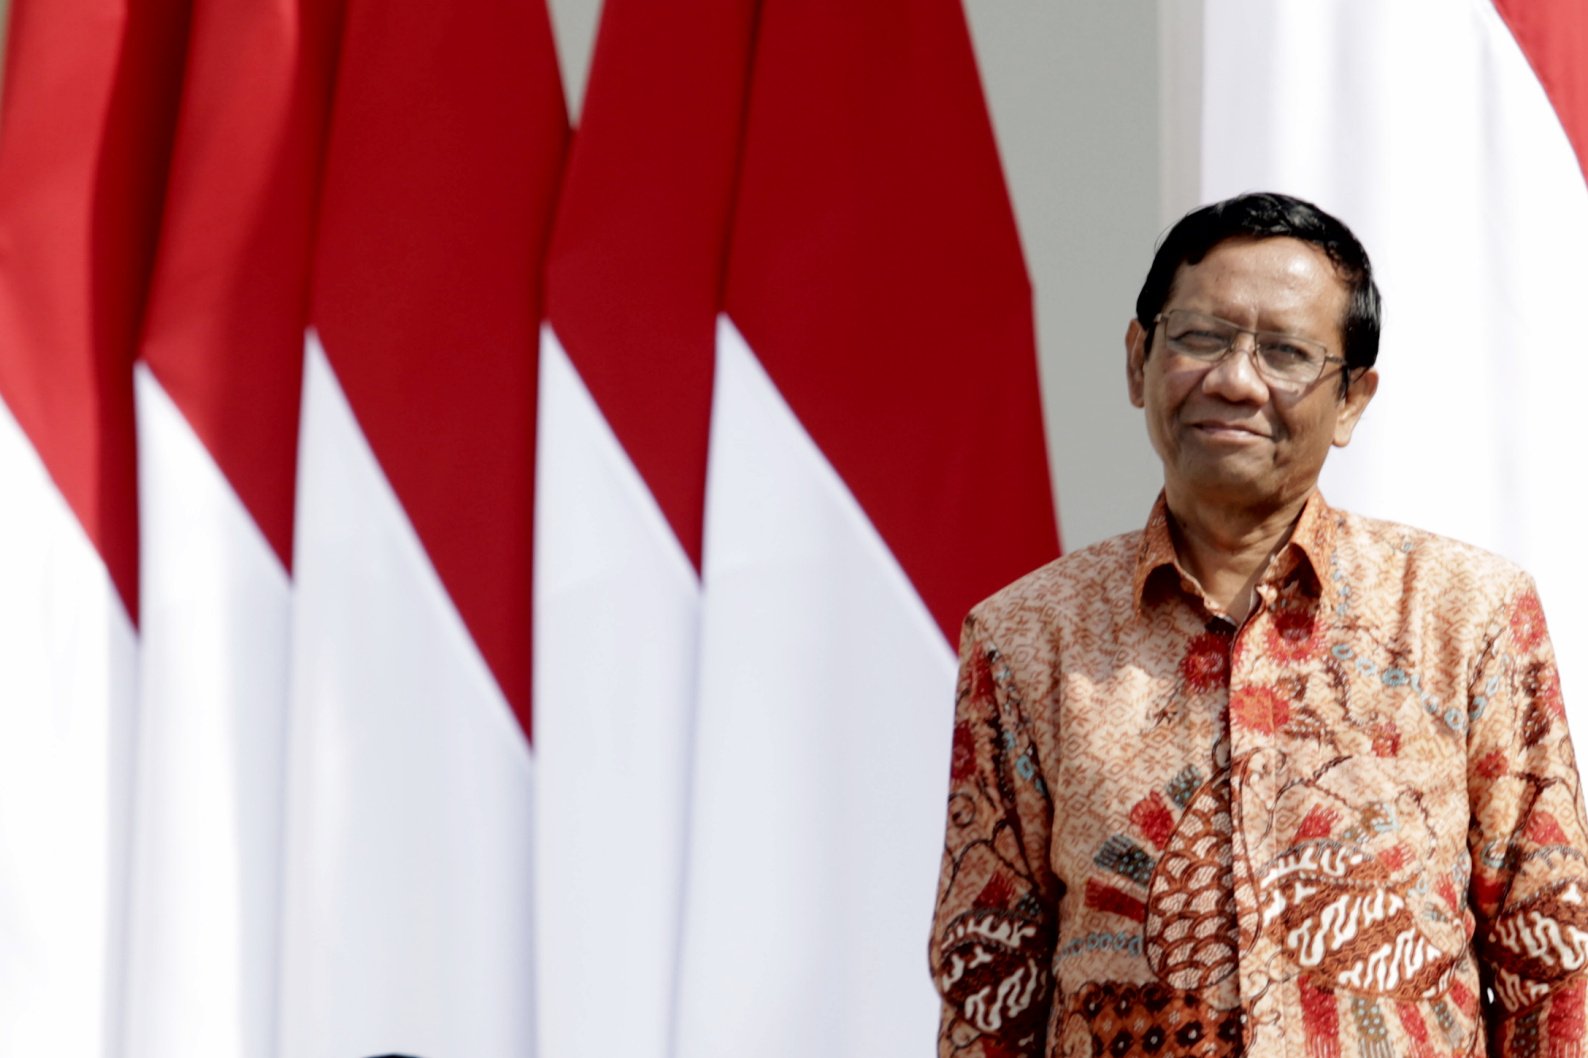 Menteri Koordinator Politik, Hukum, dan Keamanan (Polhukam) Mahfud MD. Hari ini, Rabu (23/10/2019), Presiden Joko Widodo mengumumkan para menteri dan pejabat setingkat menteri periode 2019-2024.